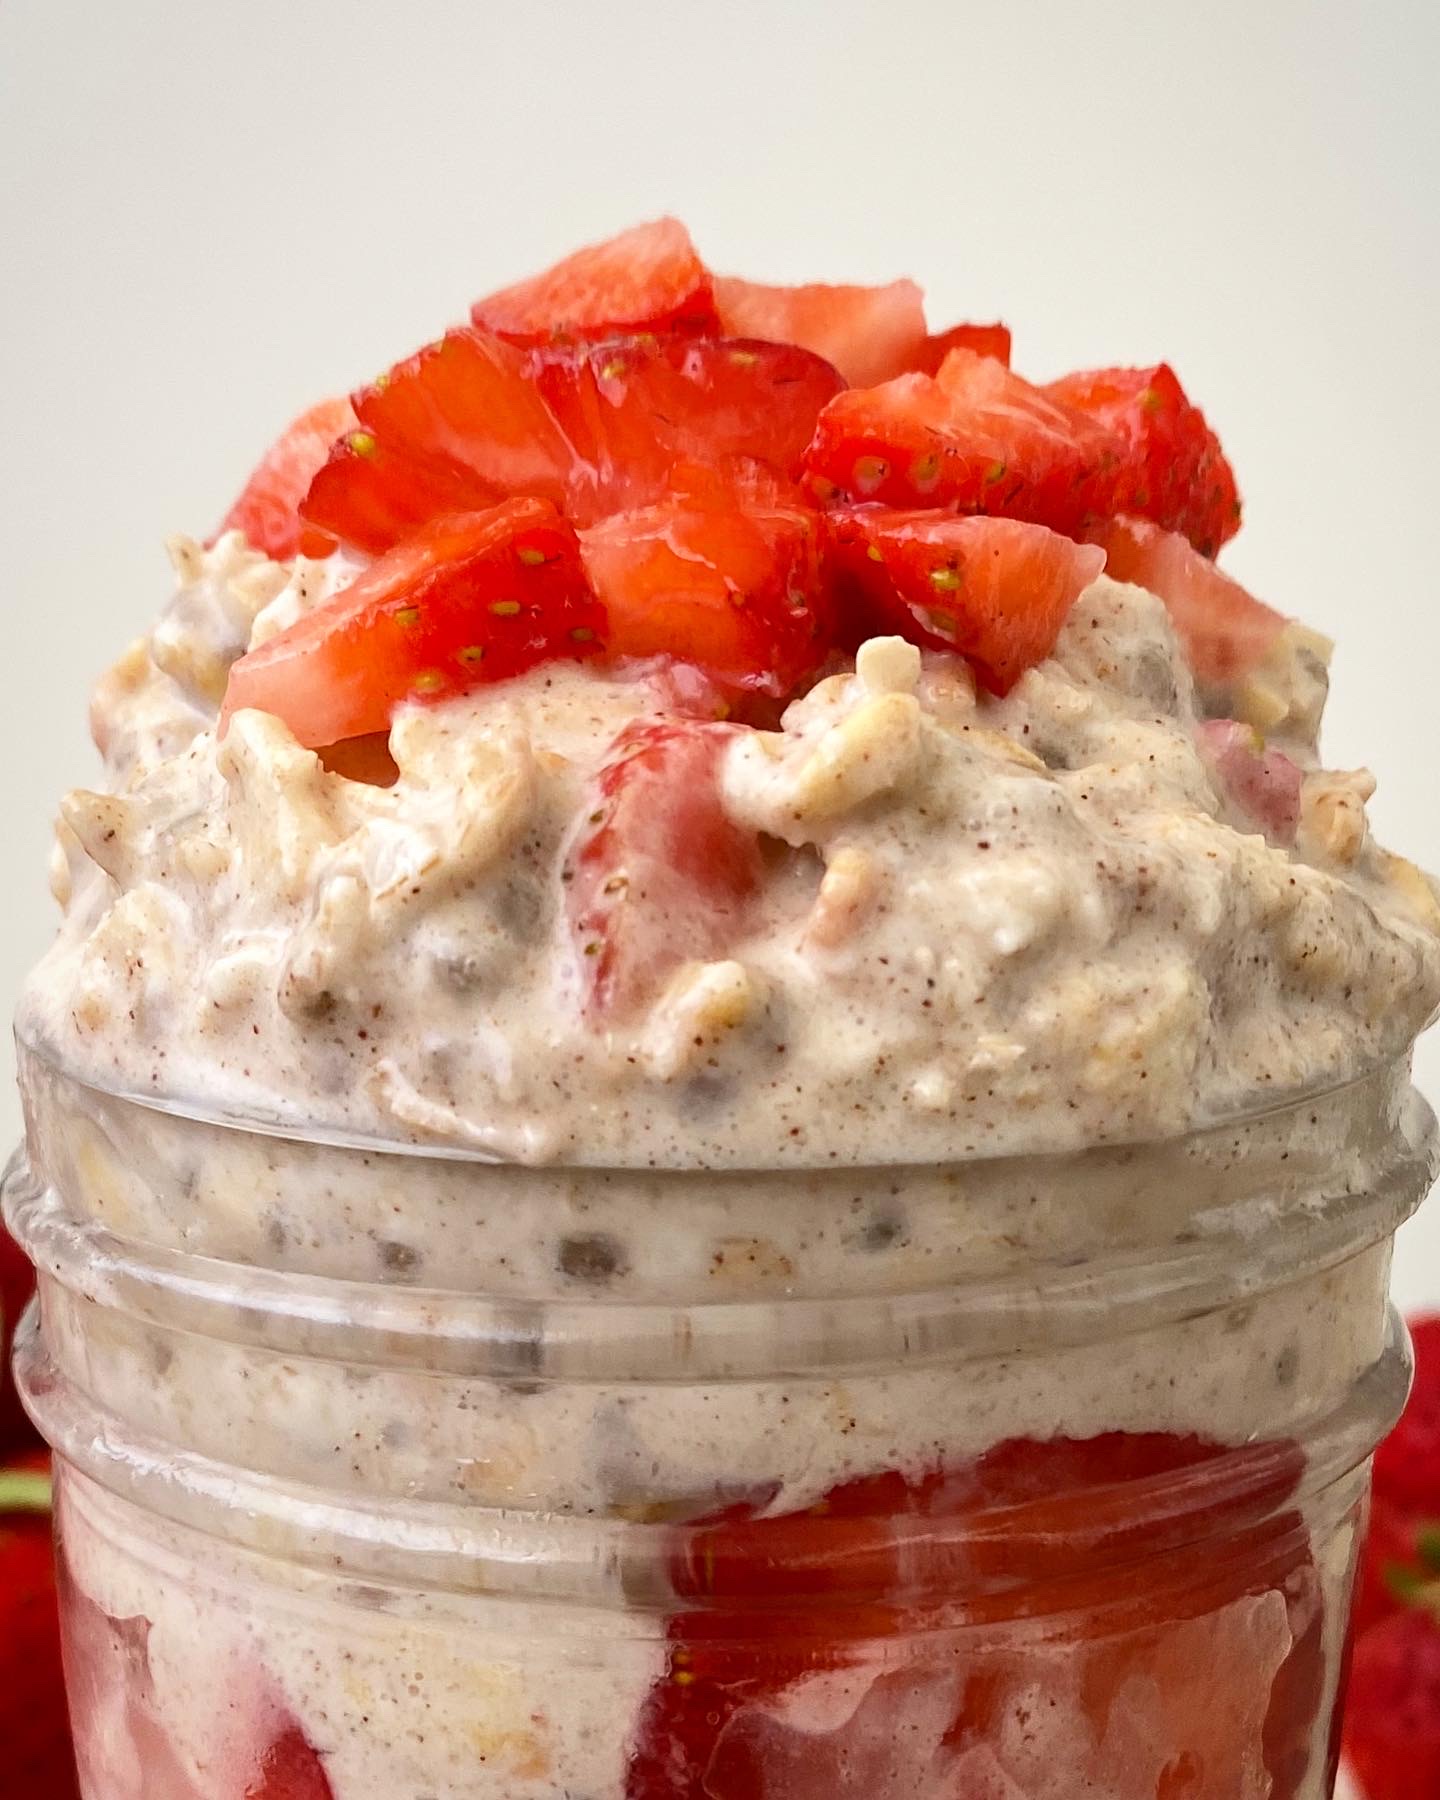 Vegan overnight oats batch prep: make them your way! - Vegan Family Kitchen